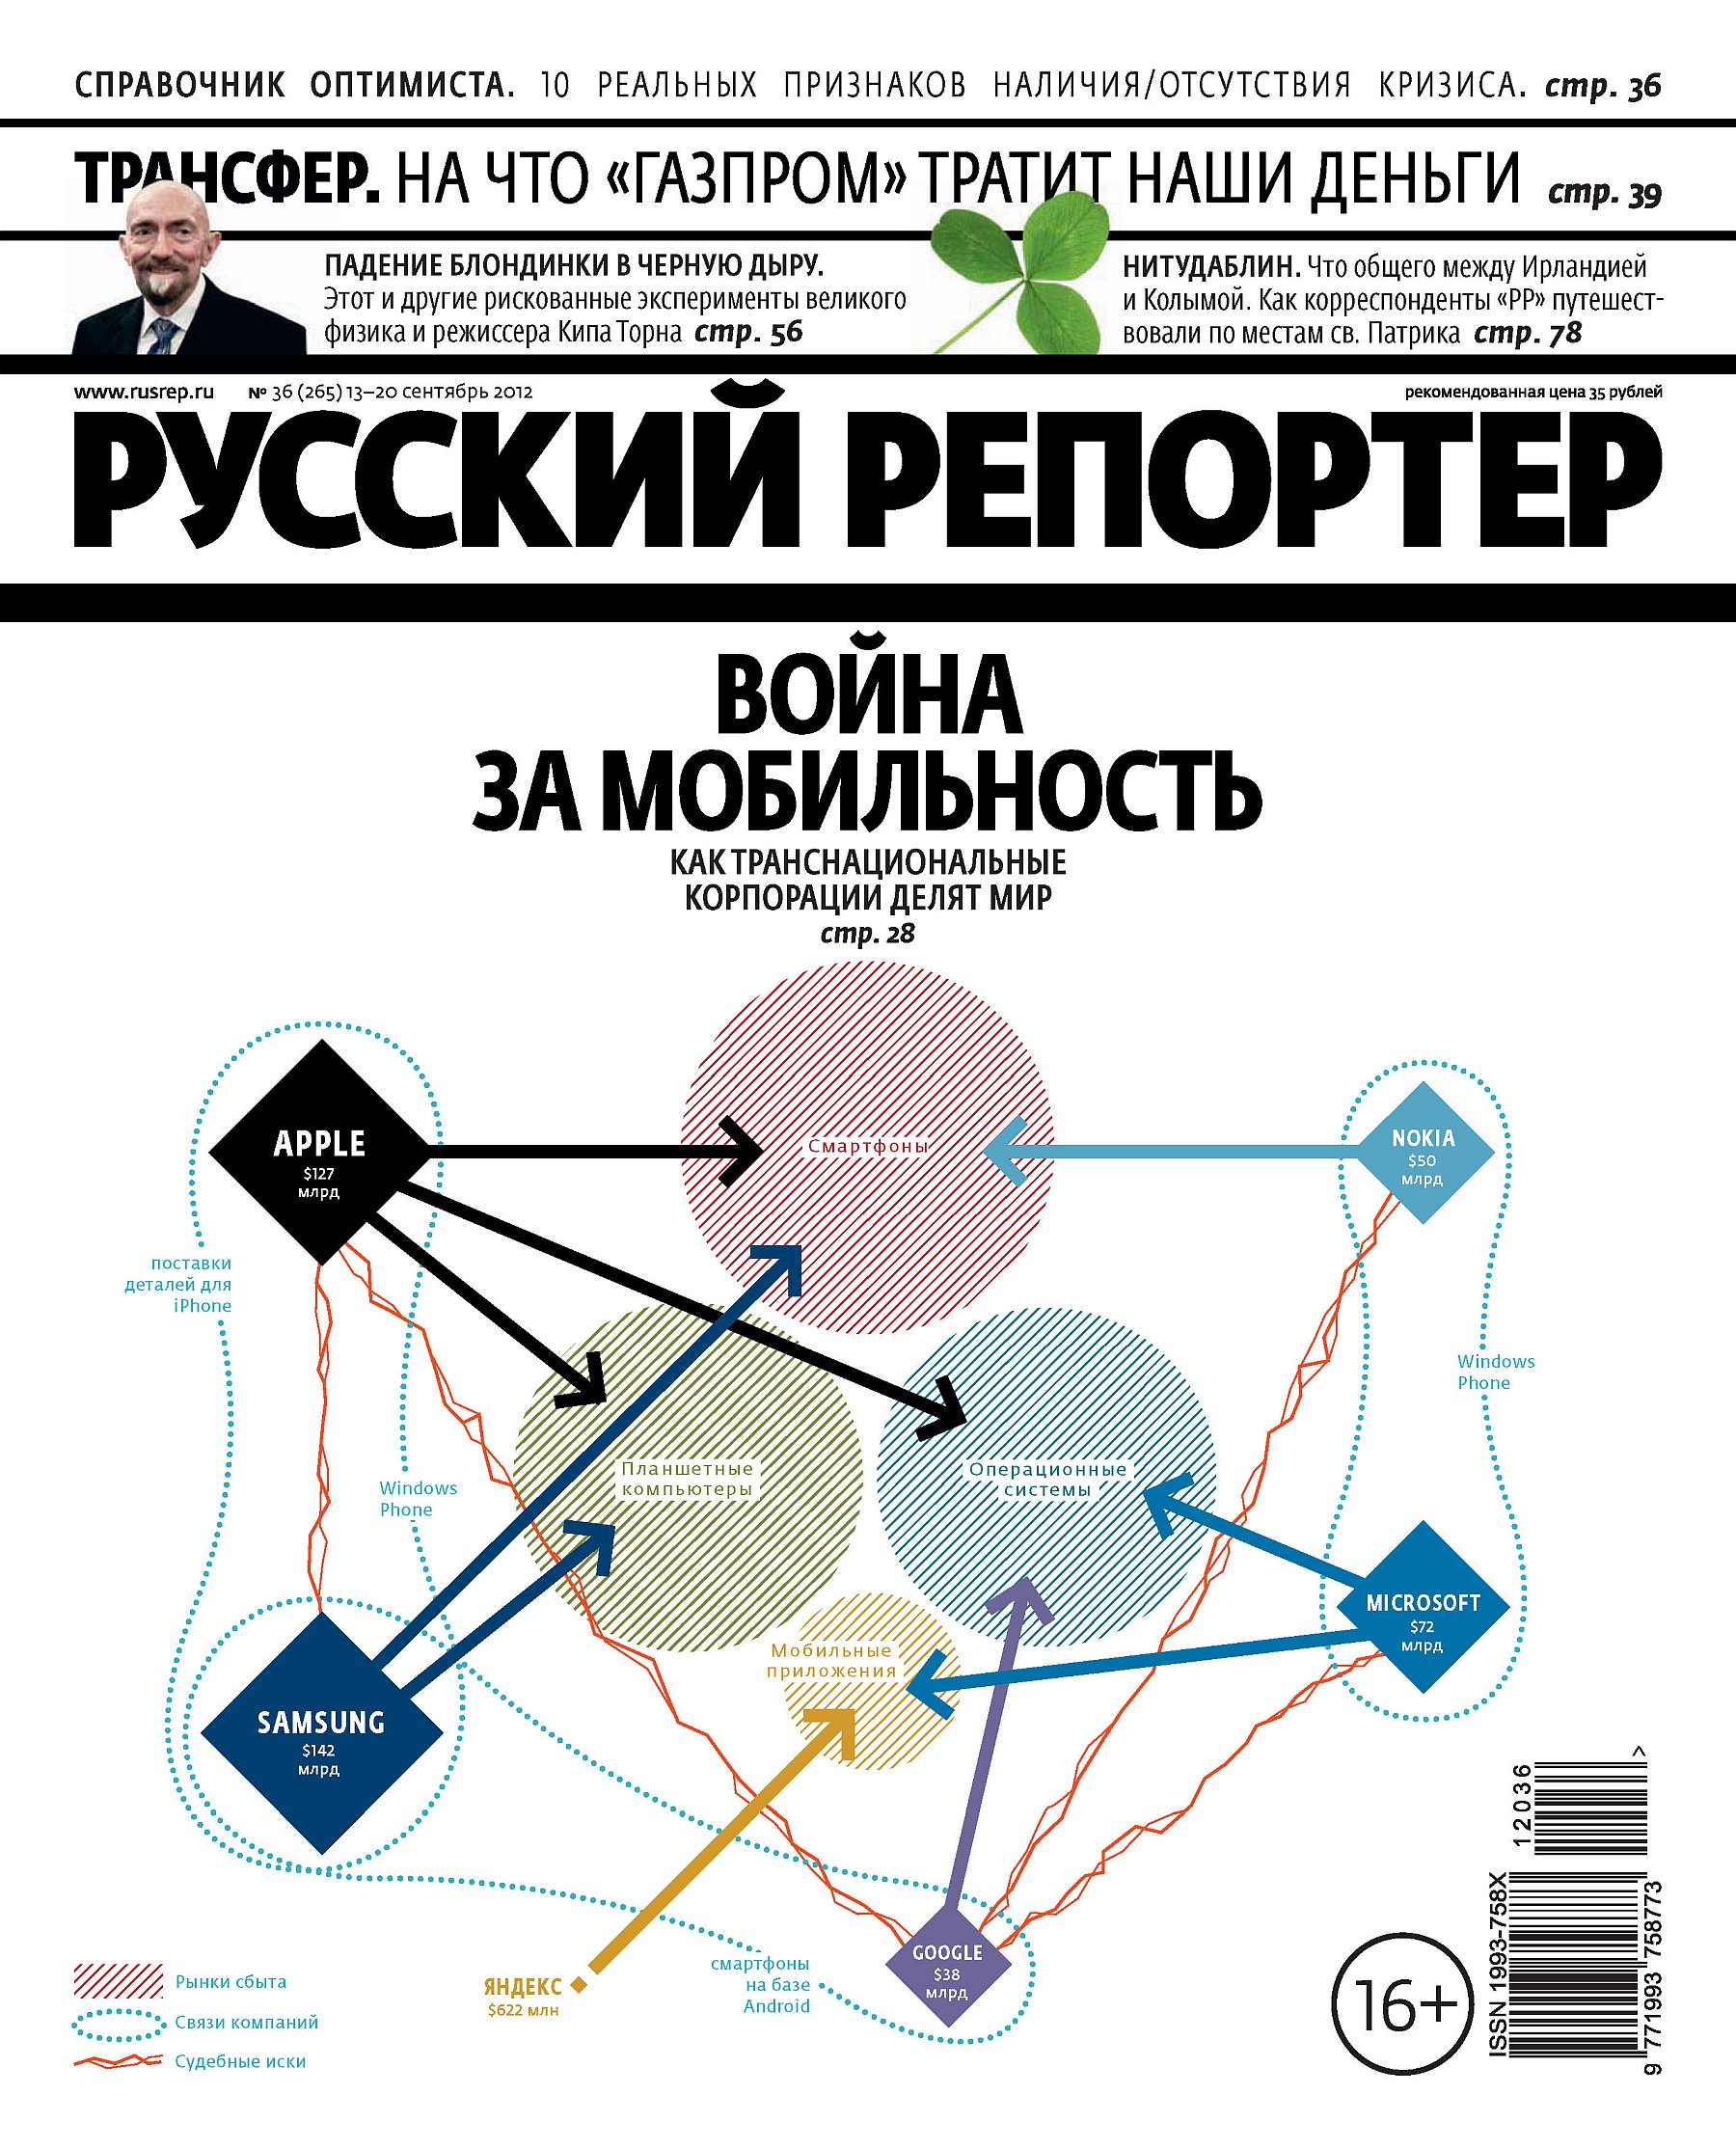 Русский Репортер №36/2012